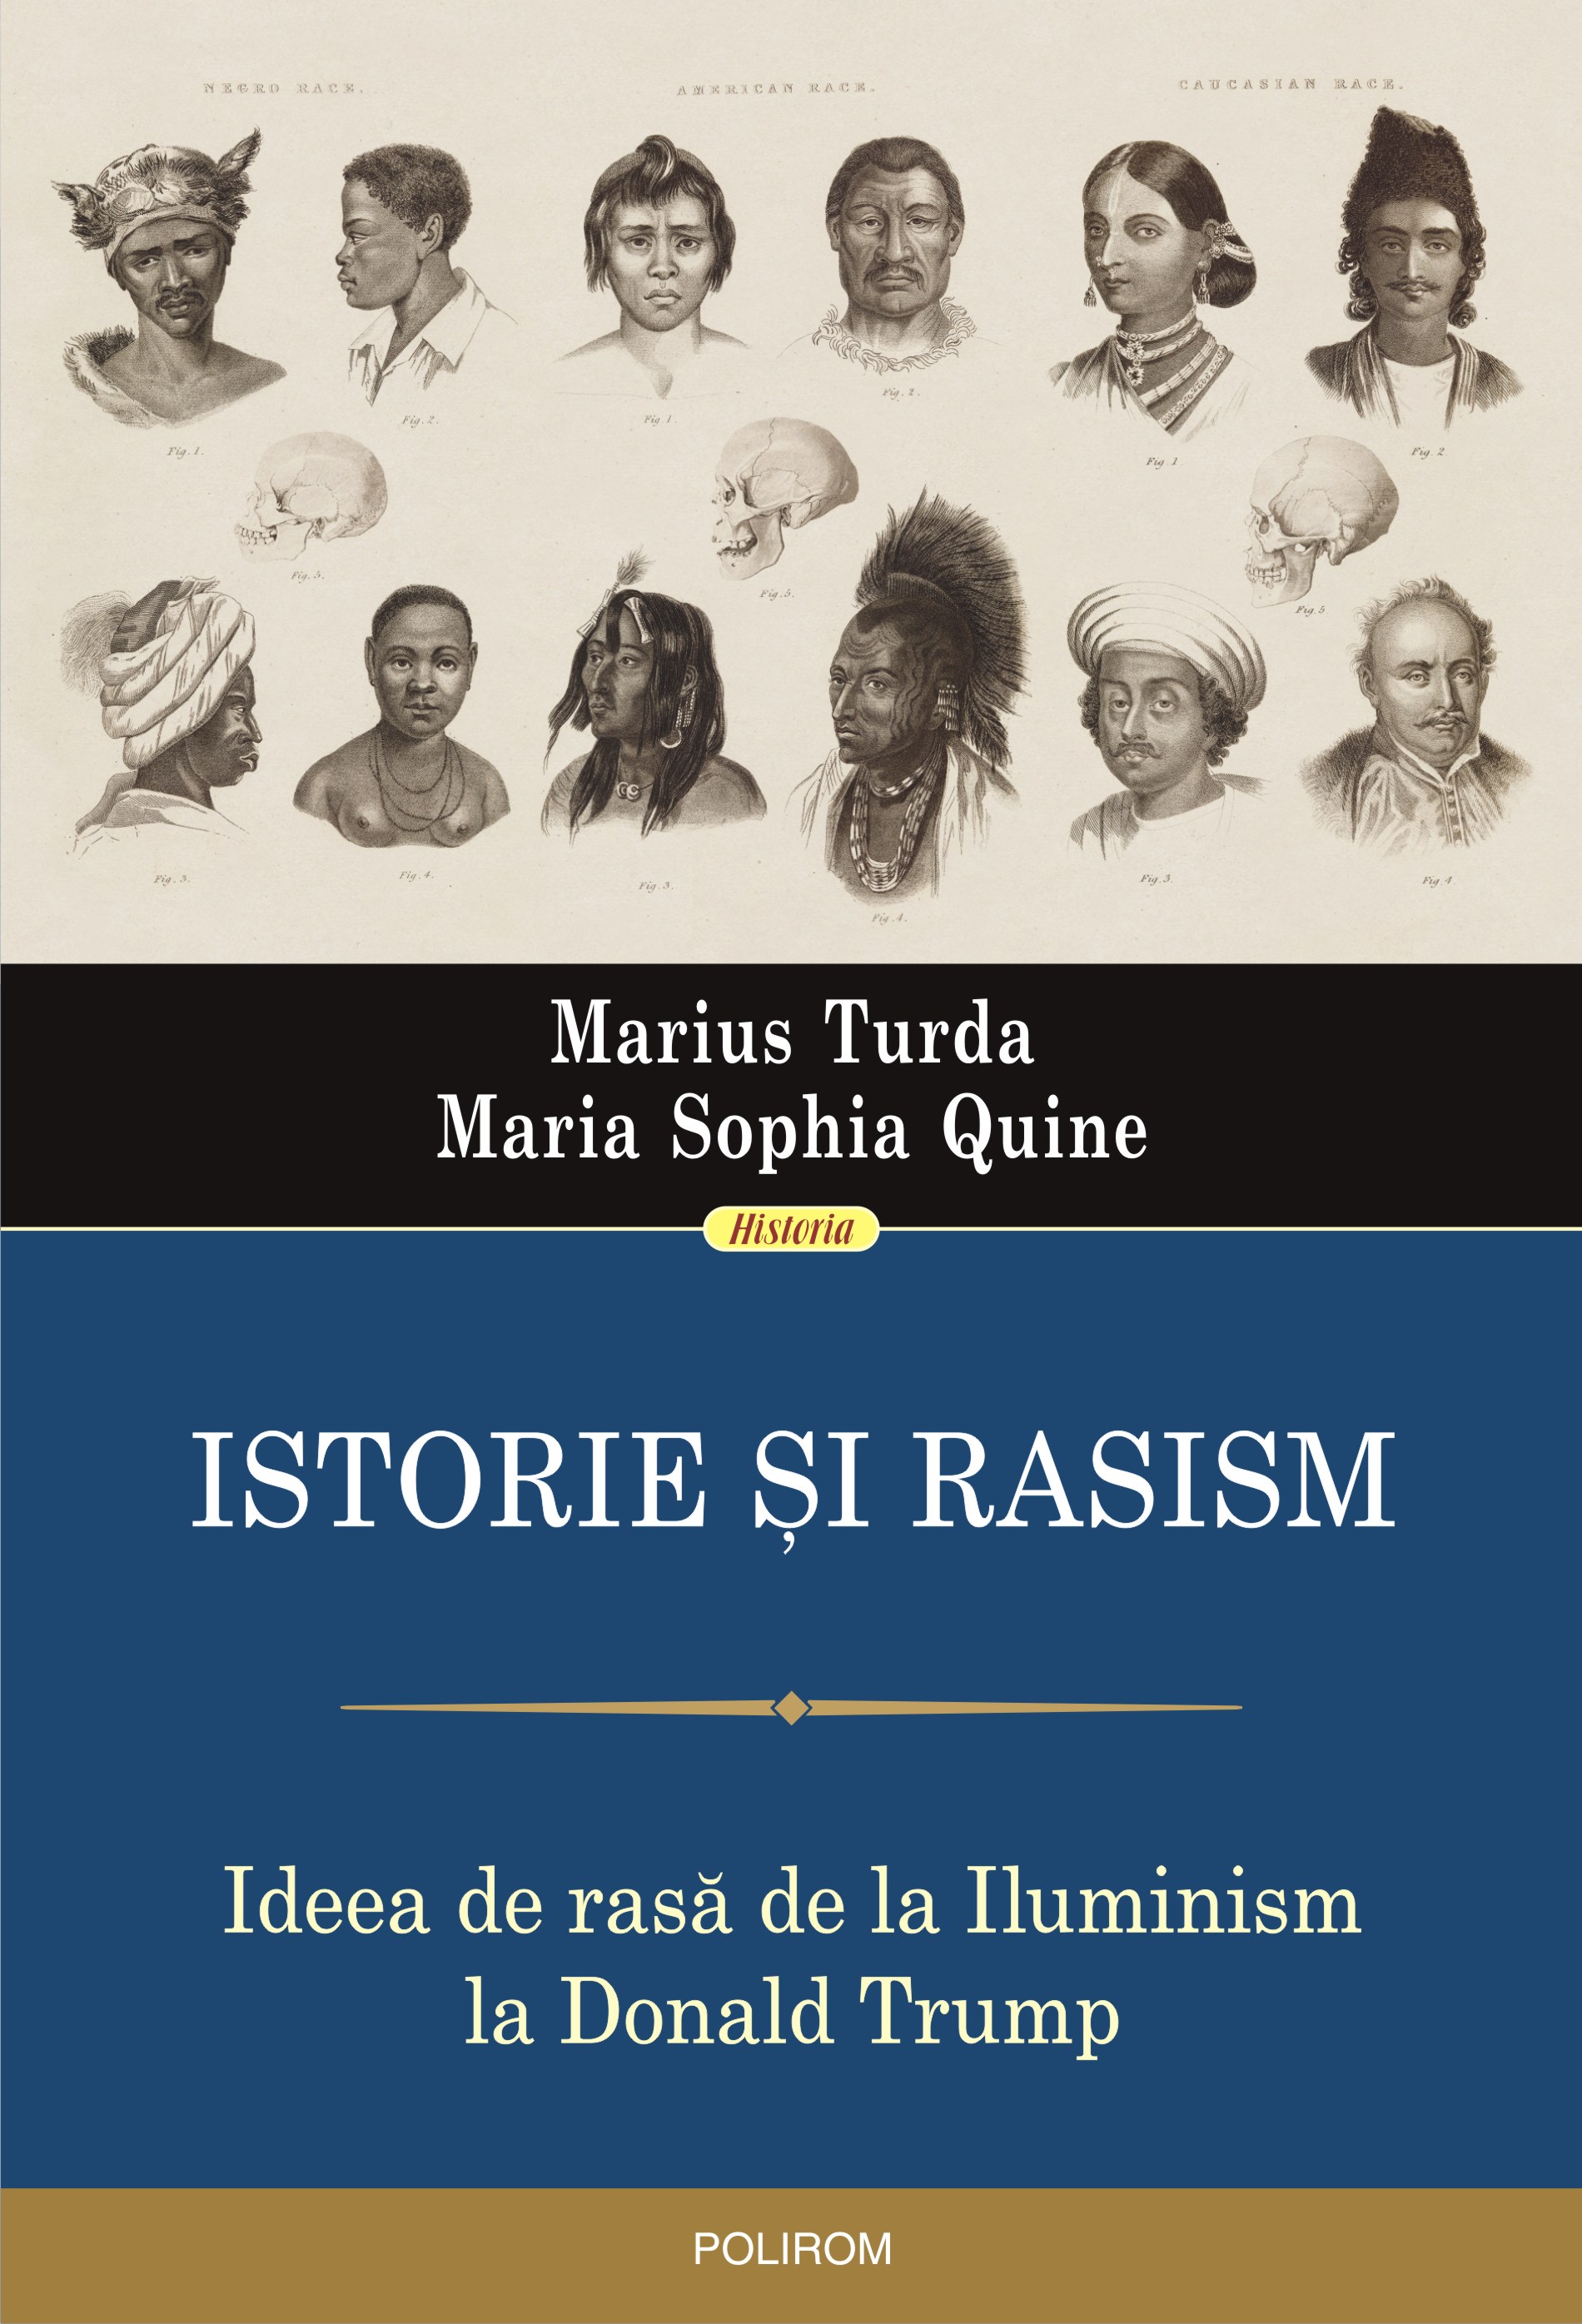 eBook Istorie si rasism. Ideea de rasa de la Iluminism la Donald Trump - Maria Sophia Quine